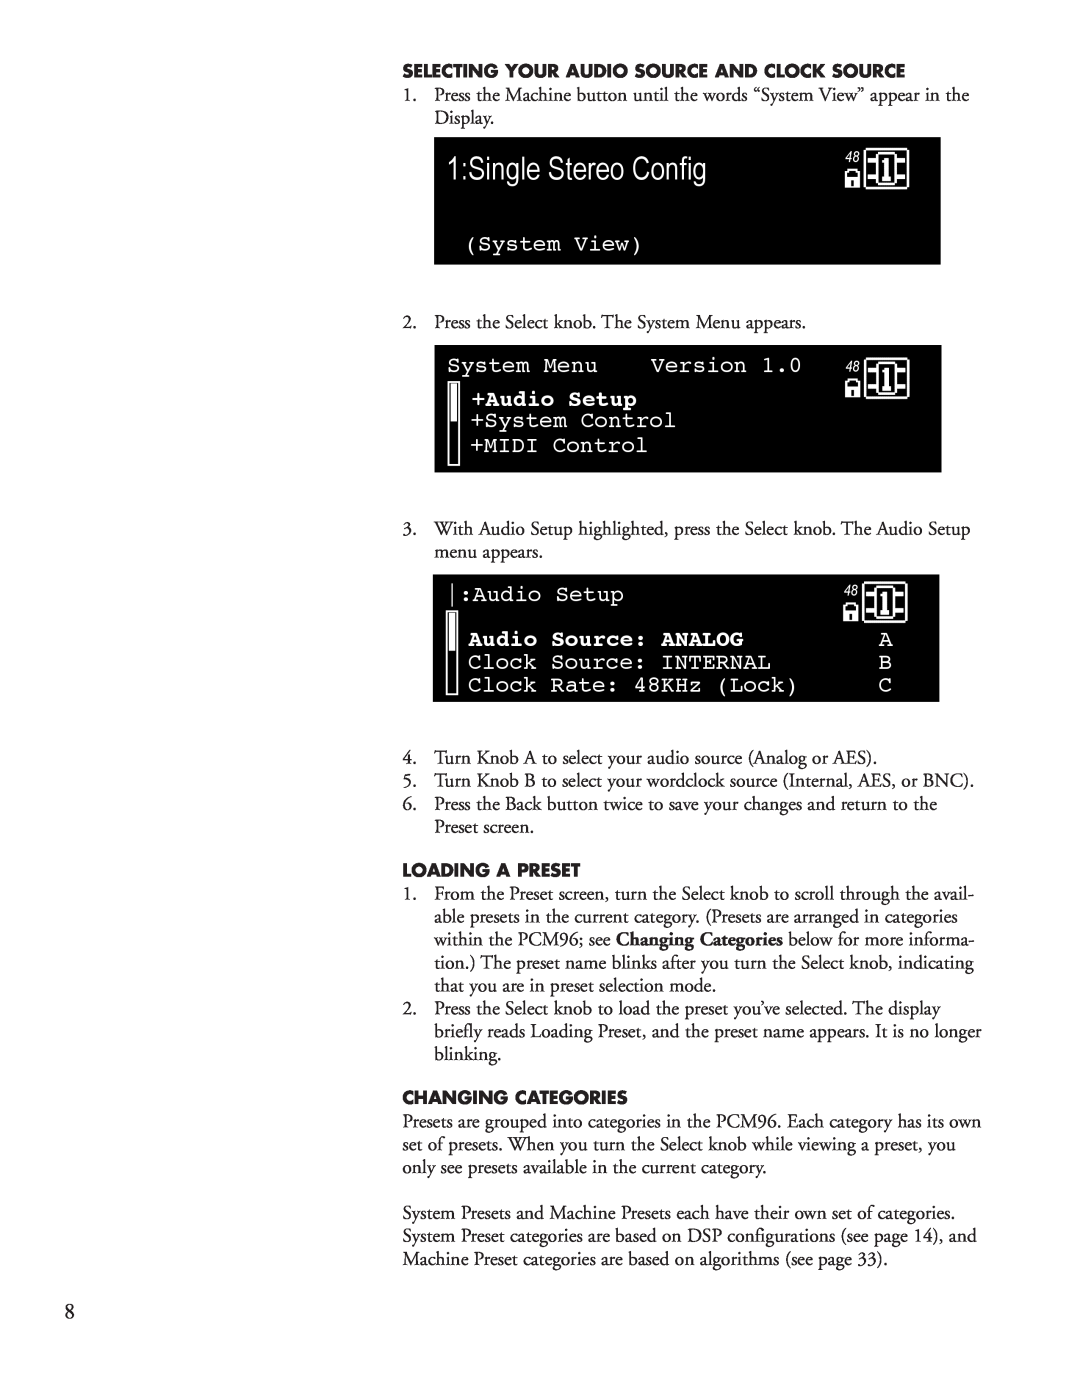 Lexicon PCM96 manual SinglConcertHallStereo- FlaCongefig4896, +Audio Setup, Audio Source ANALOG 